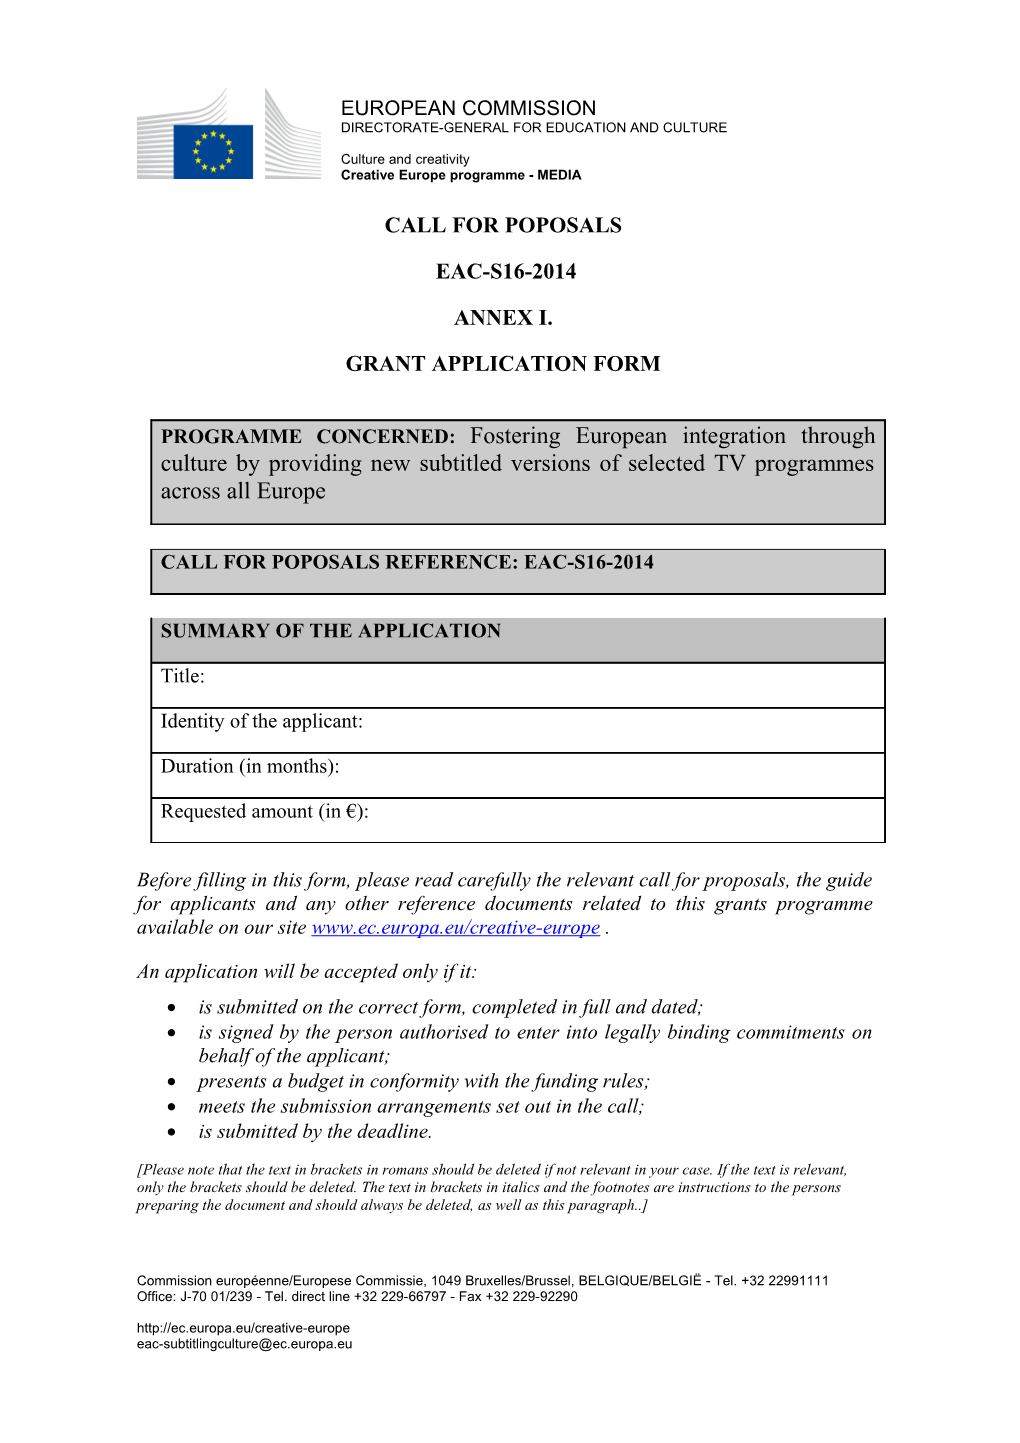 Annex I - Grant Application Form